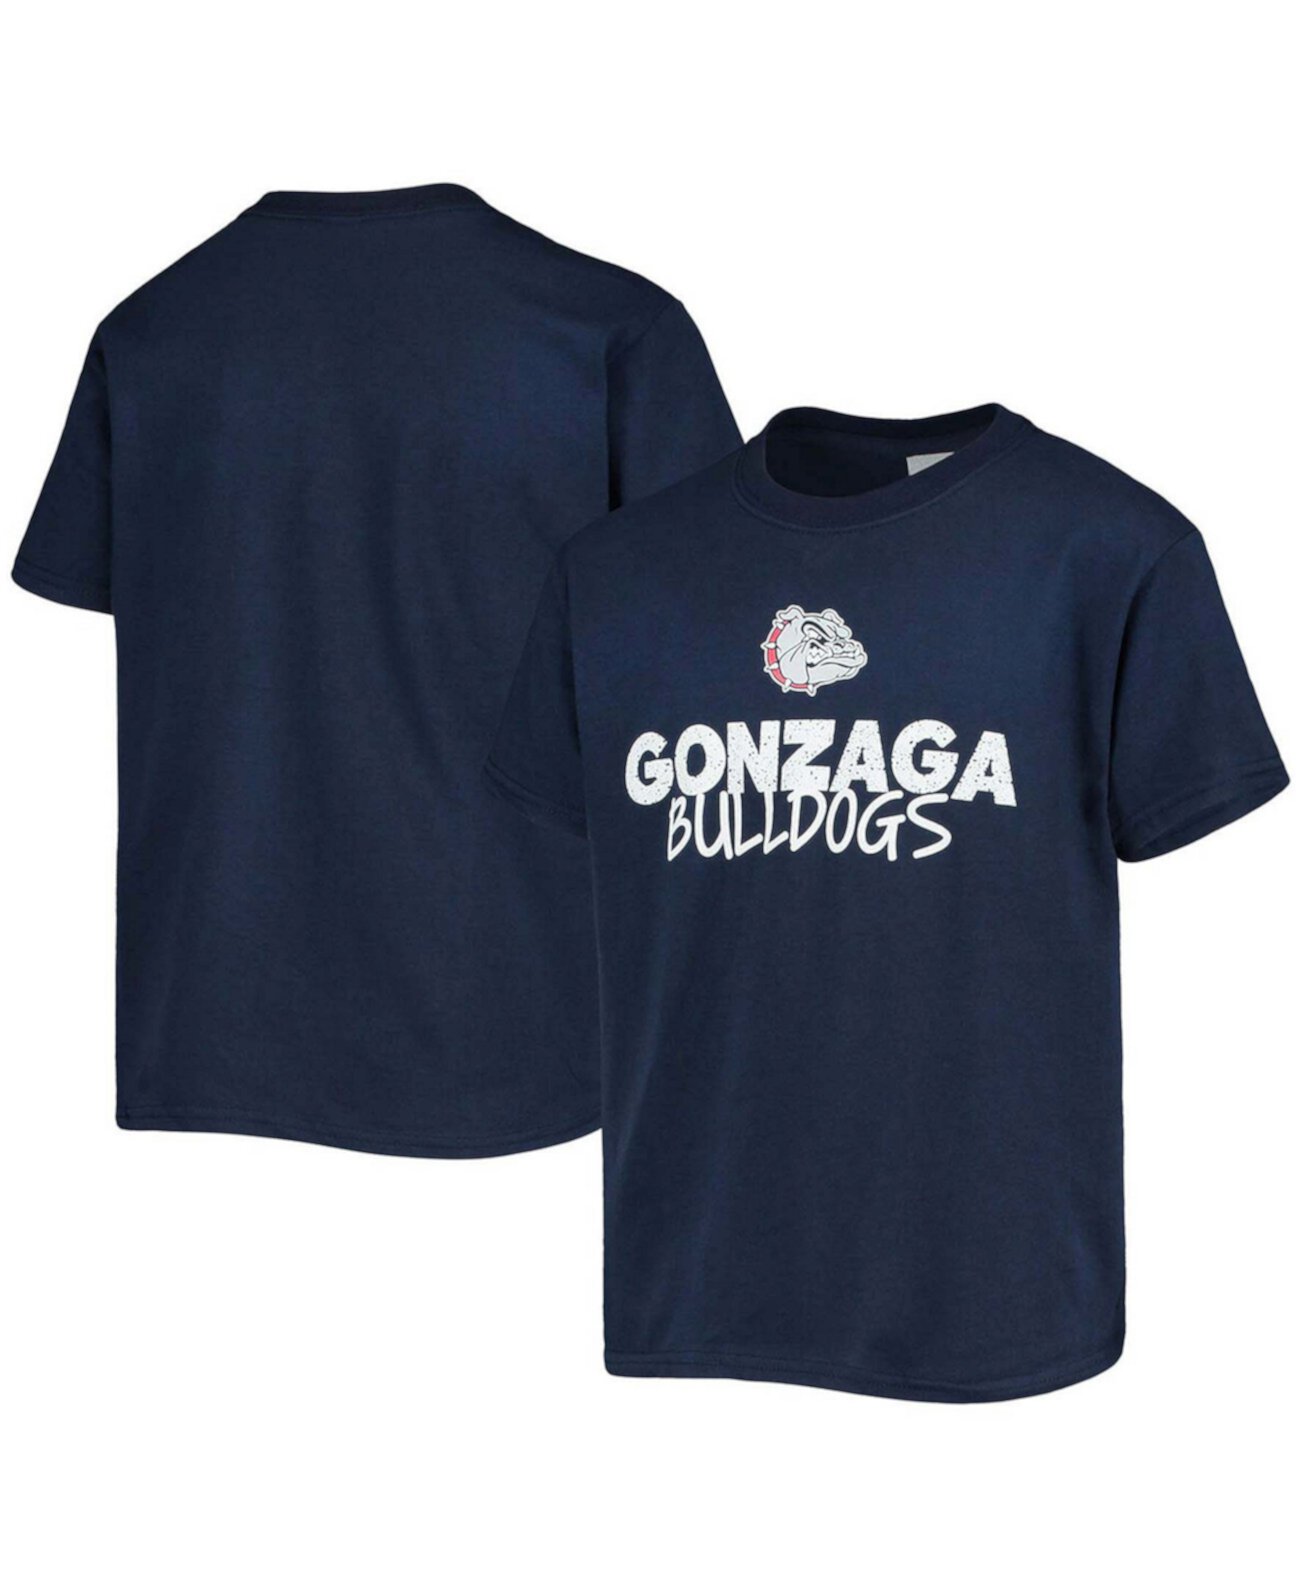 Темно-синяя футболка команды Gonzaga Bulldogs для мальчиков и девочек Big Boys and Girls Two Feet Ahead